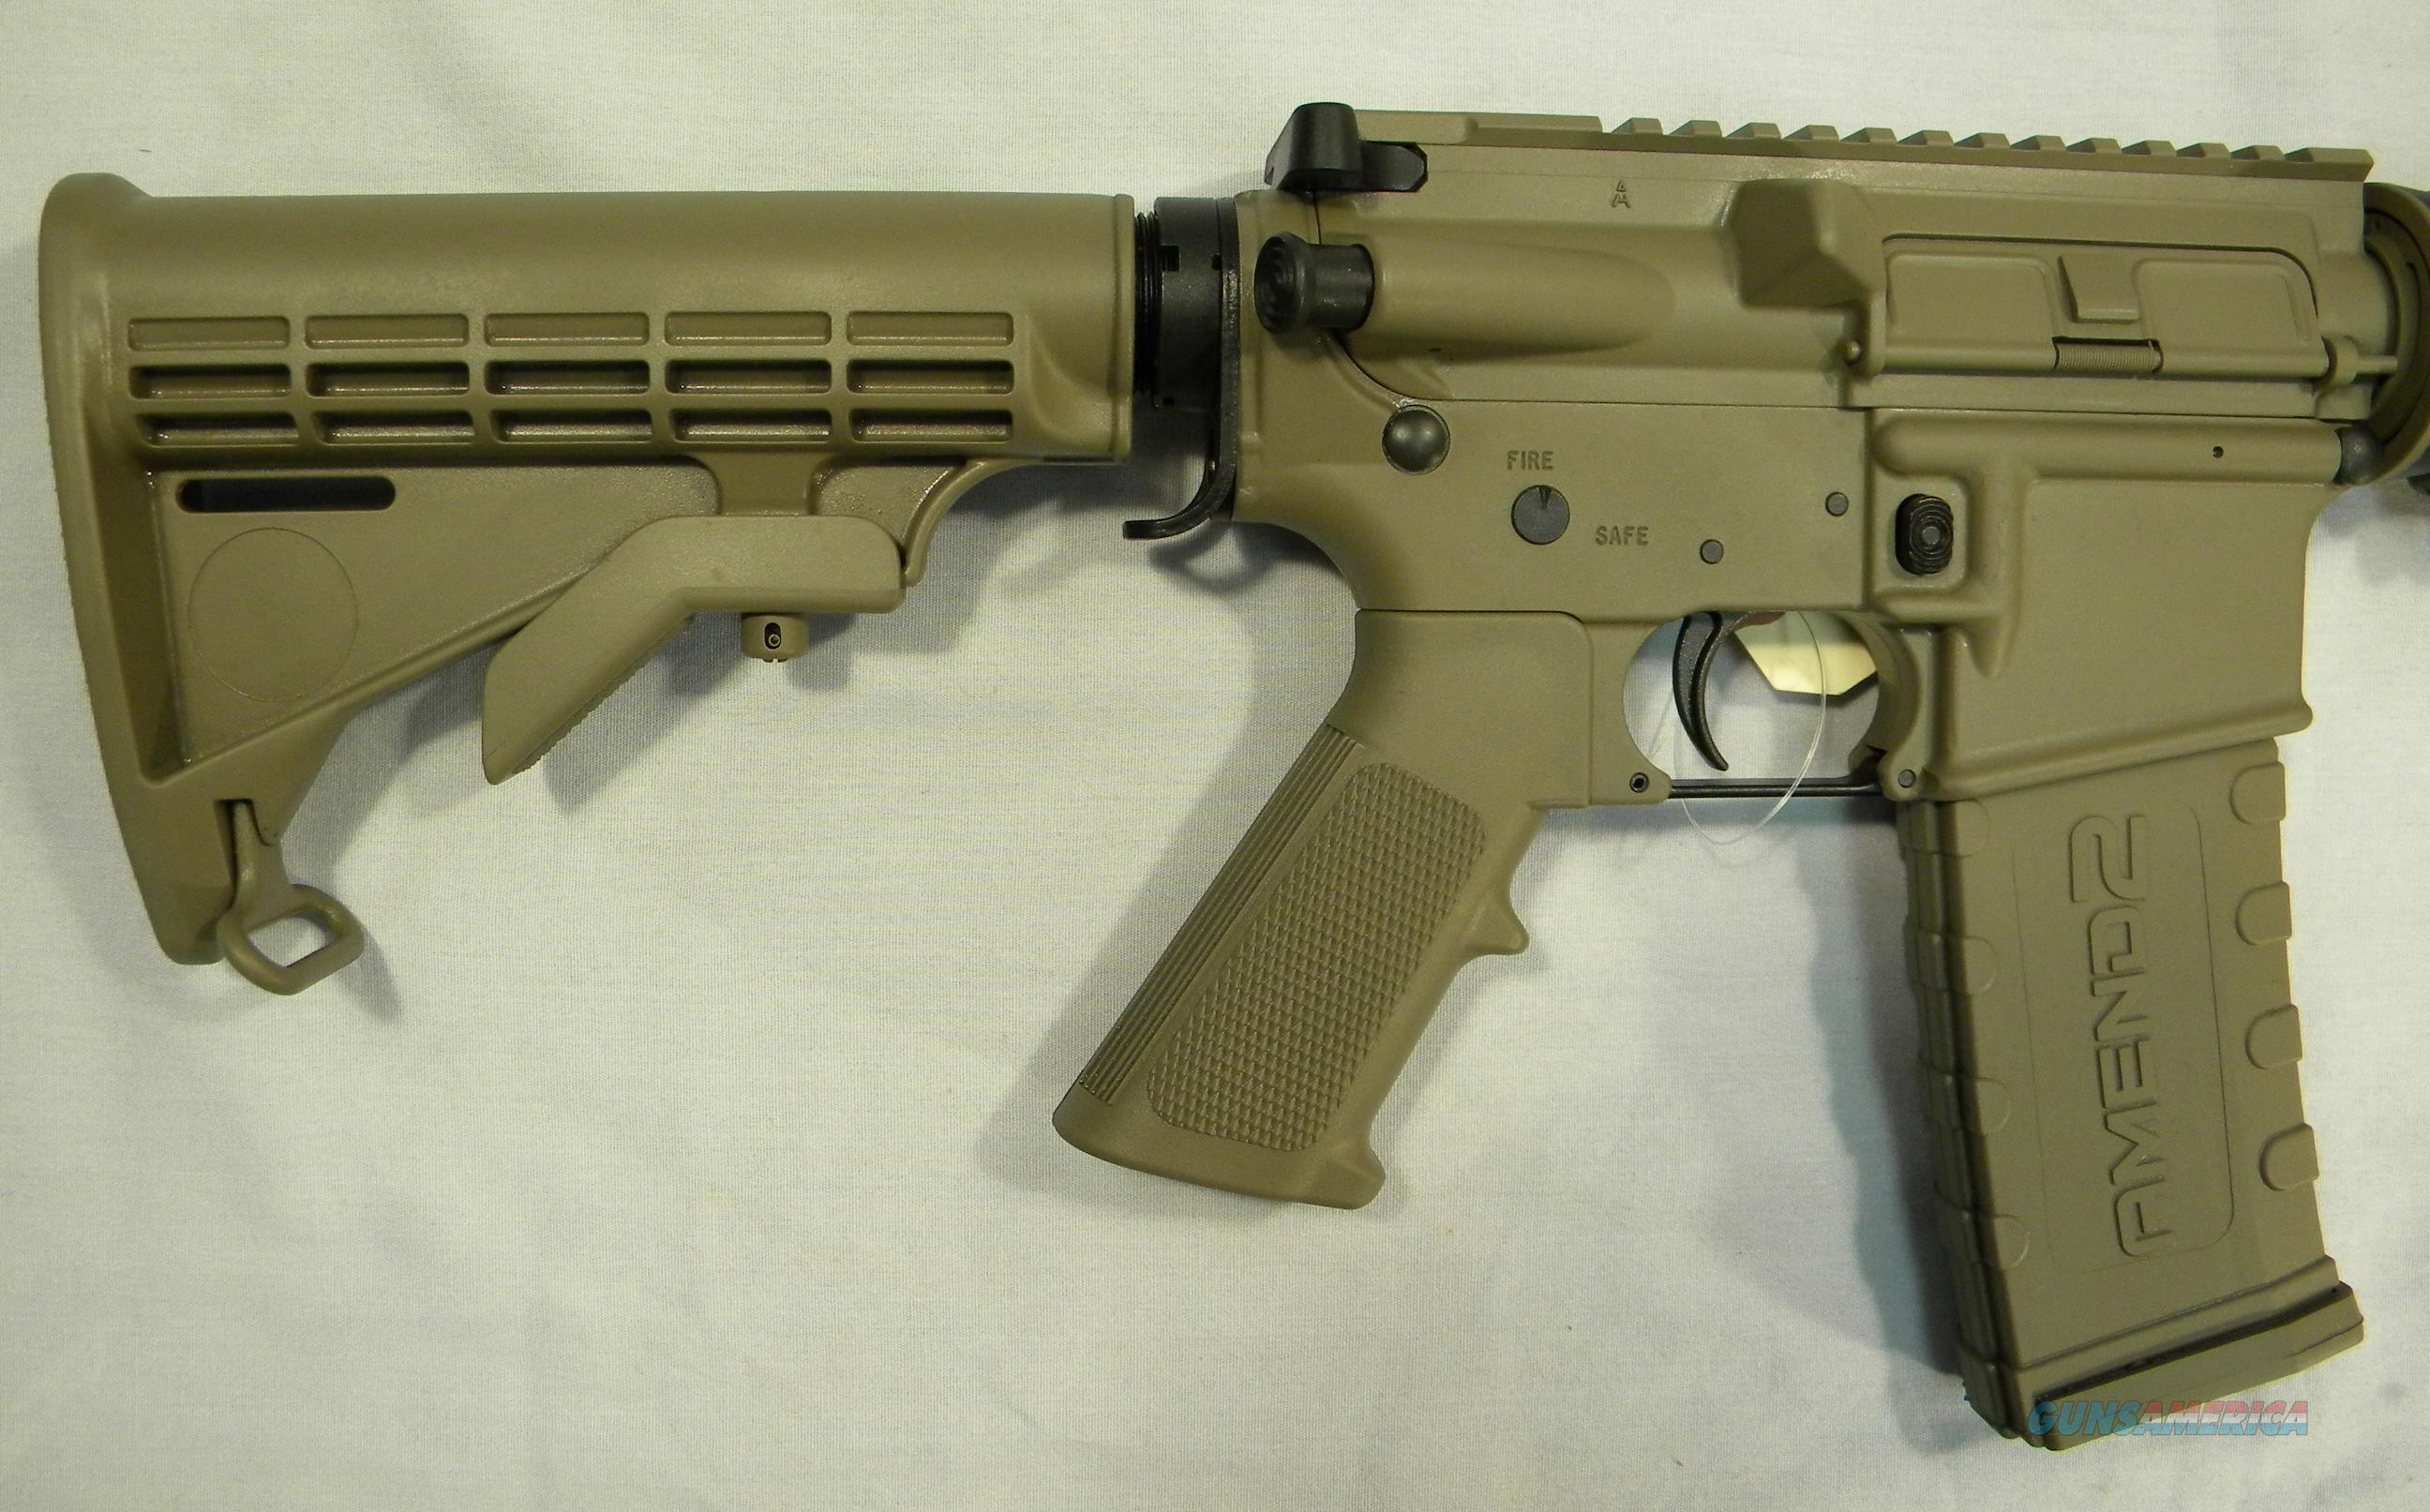 AR-15 Rifle, AOS Exclusive! LAR Gri... for sale at Gunsamerica.com ...